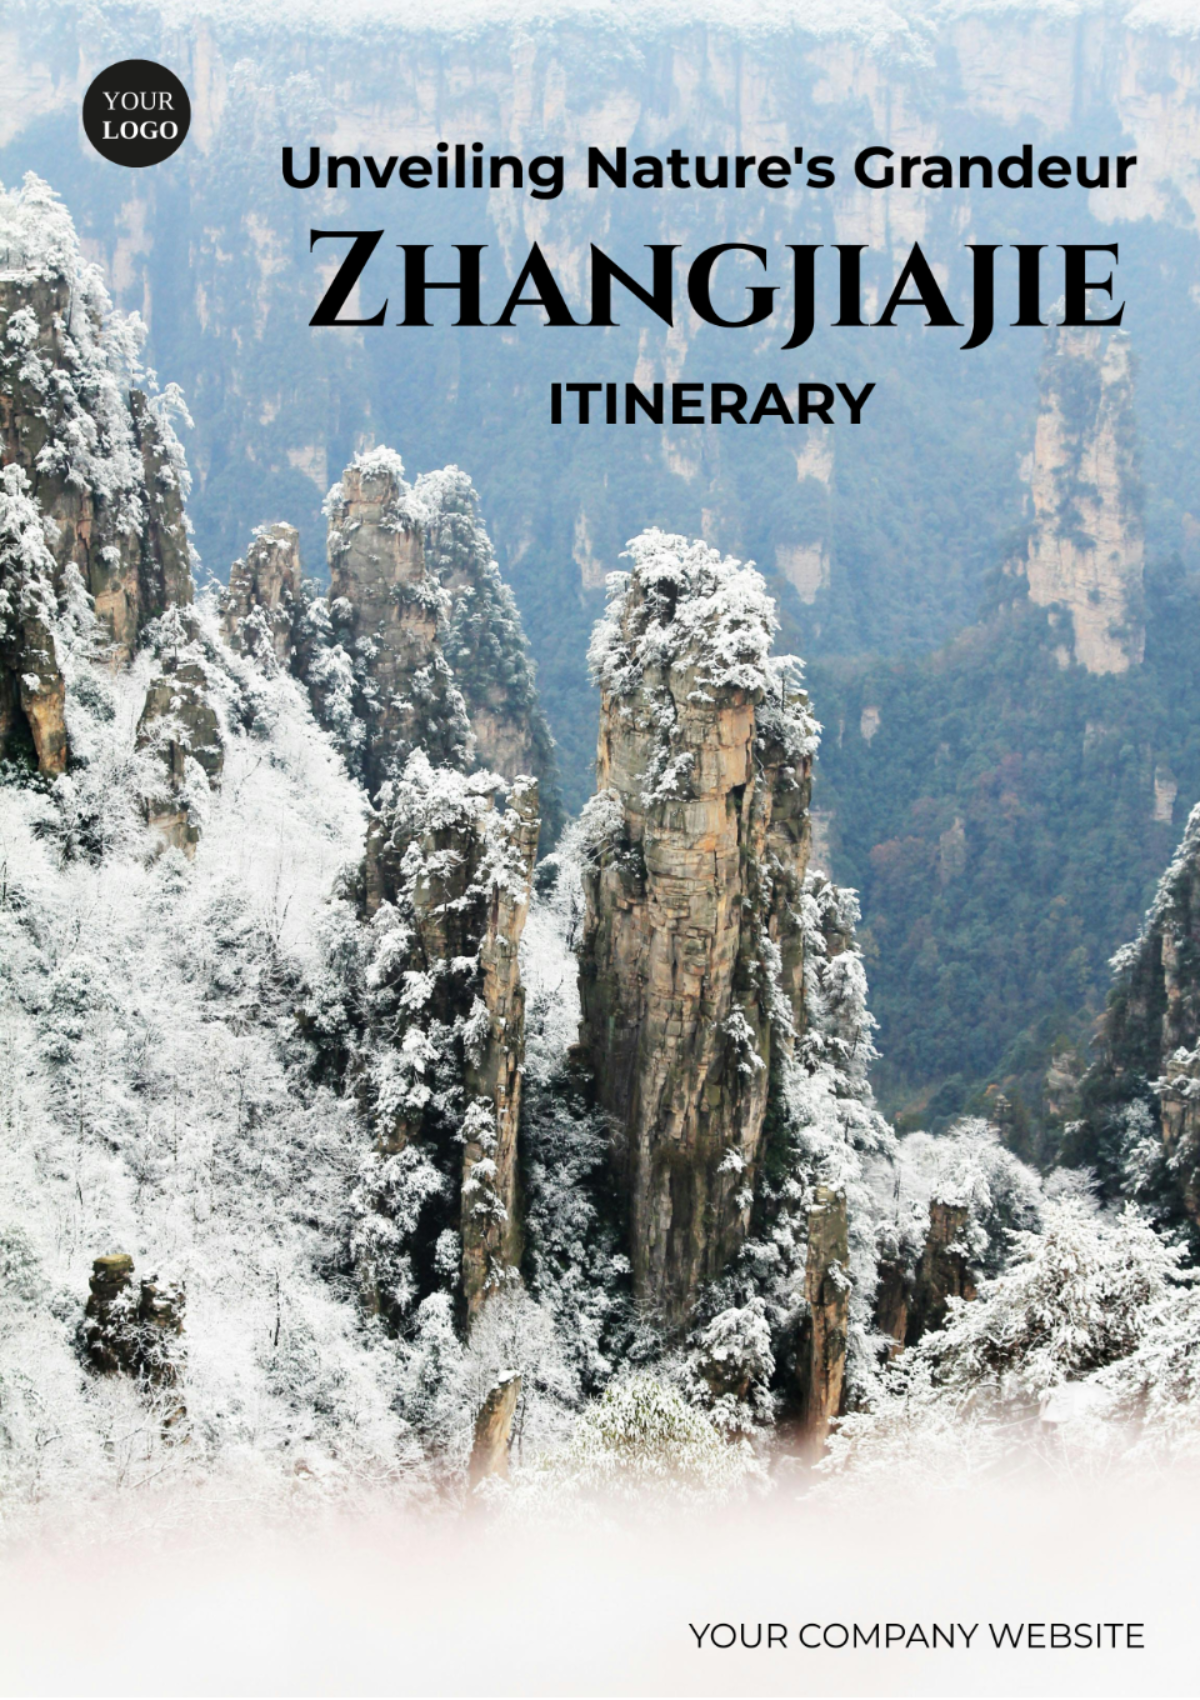 Zhangjiajie Itinerary Template